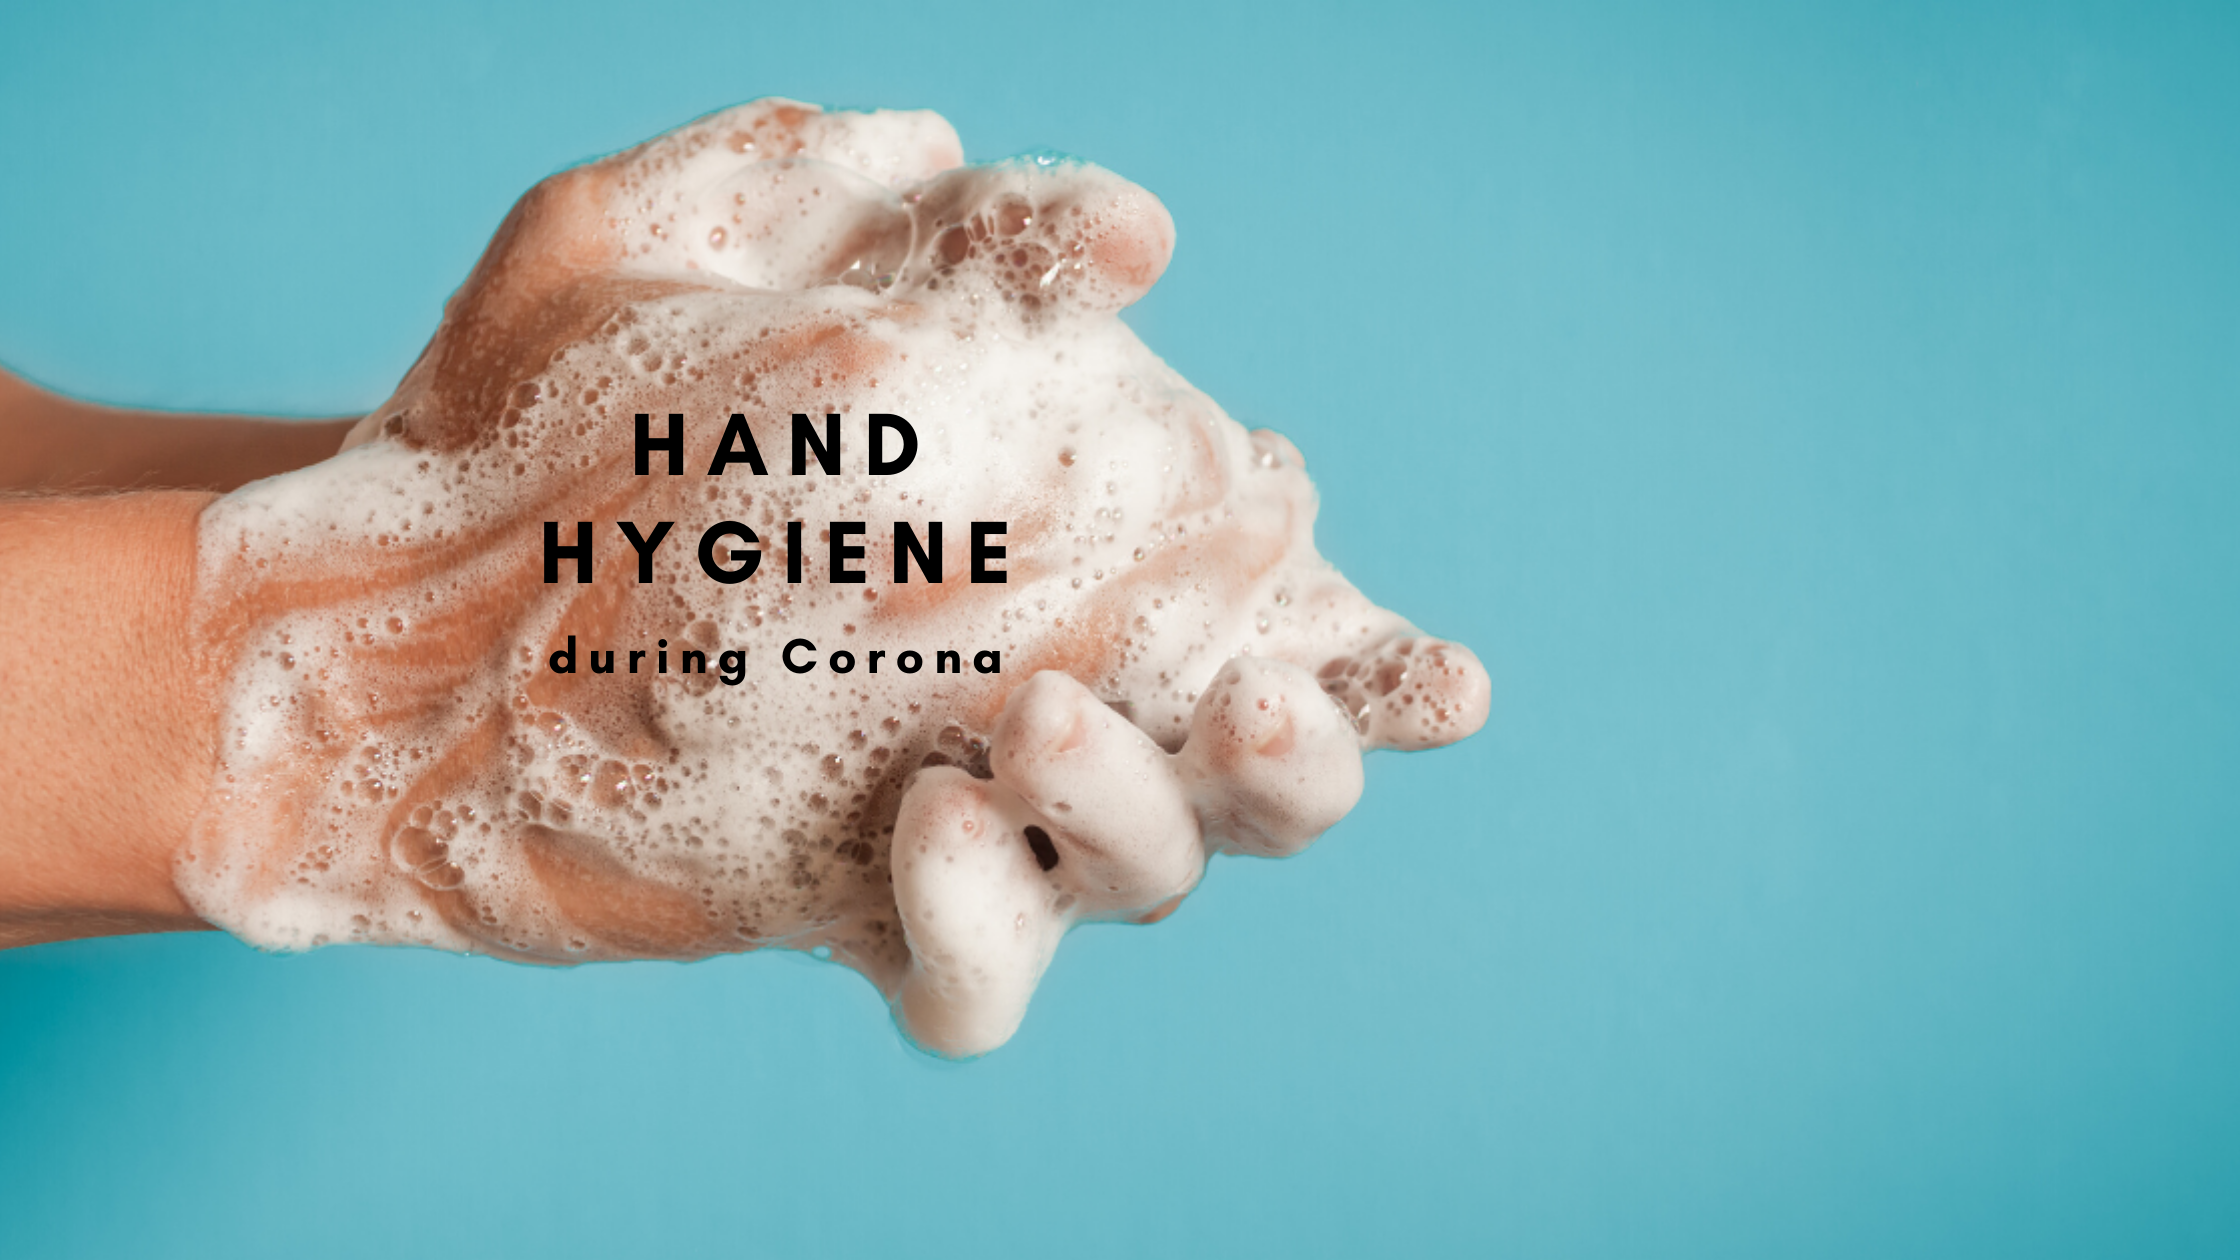 Hand hygiene during Corona